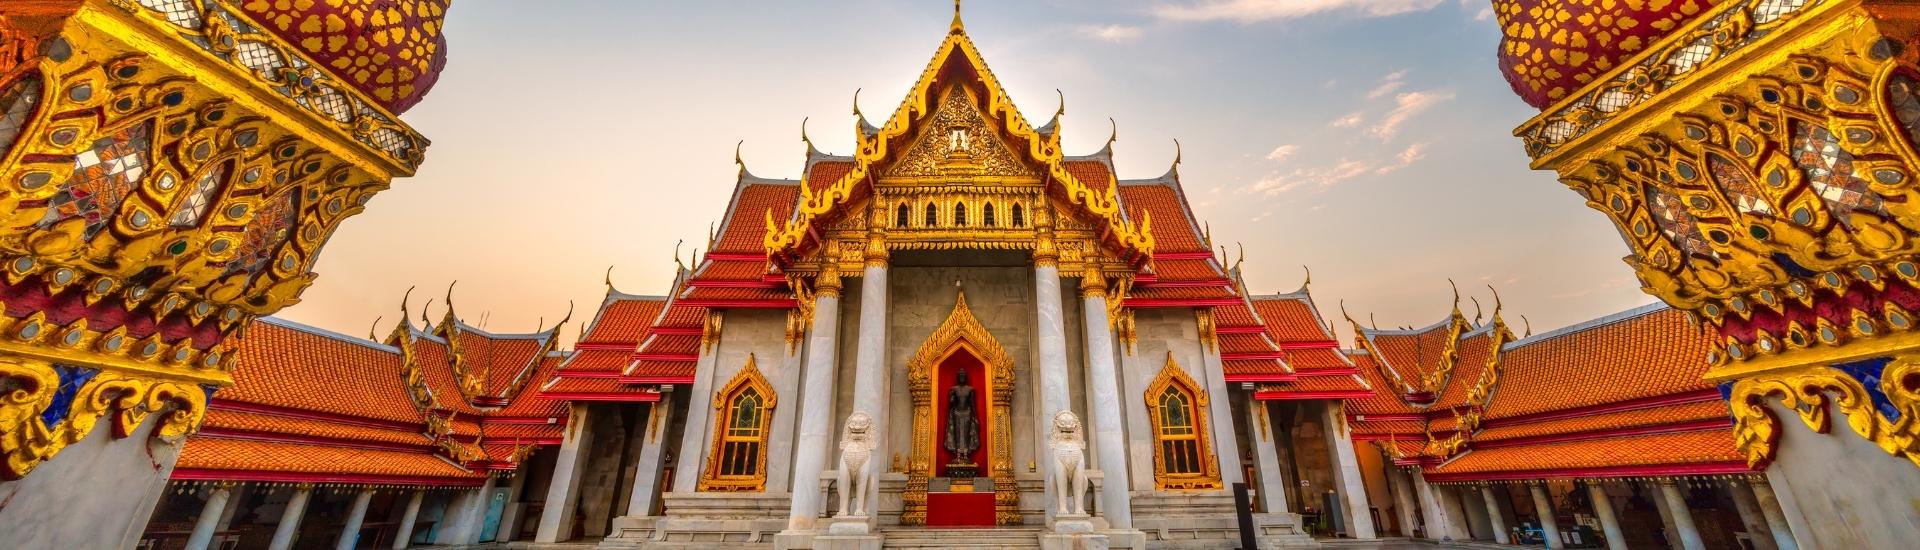 Marble Temple (Wat Benchamabophit Dusitwanaram) in Bangkok, Thailand